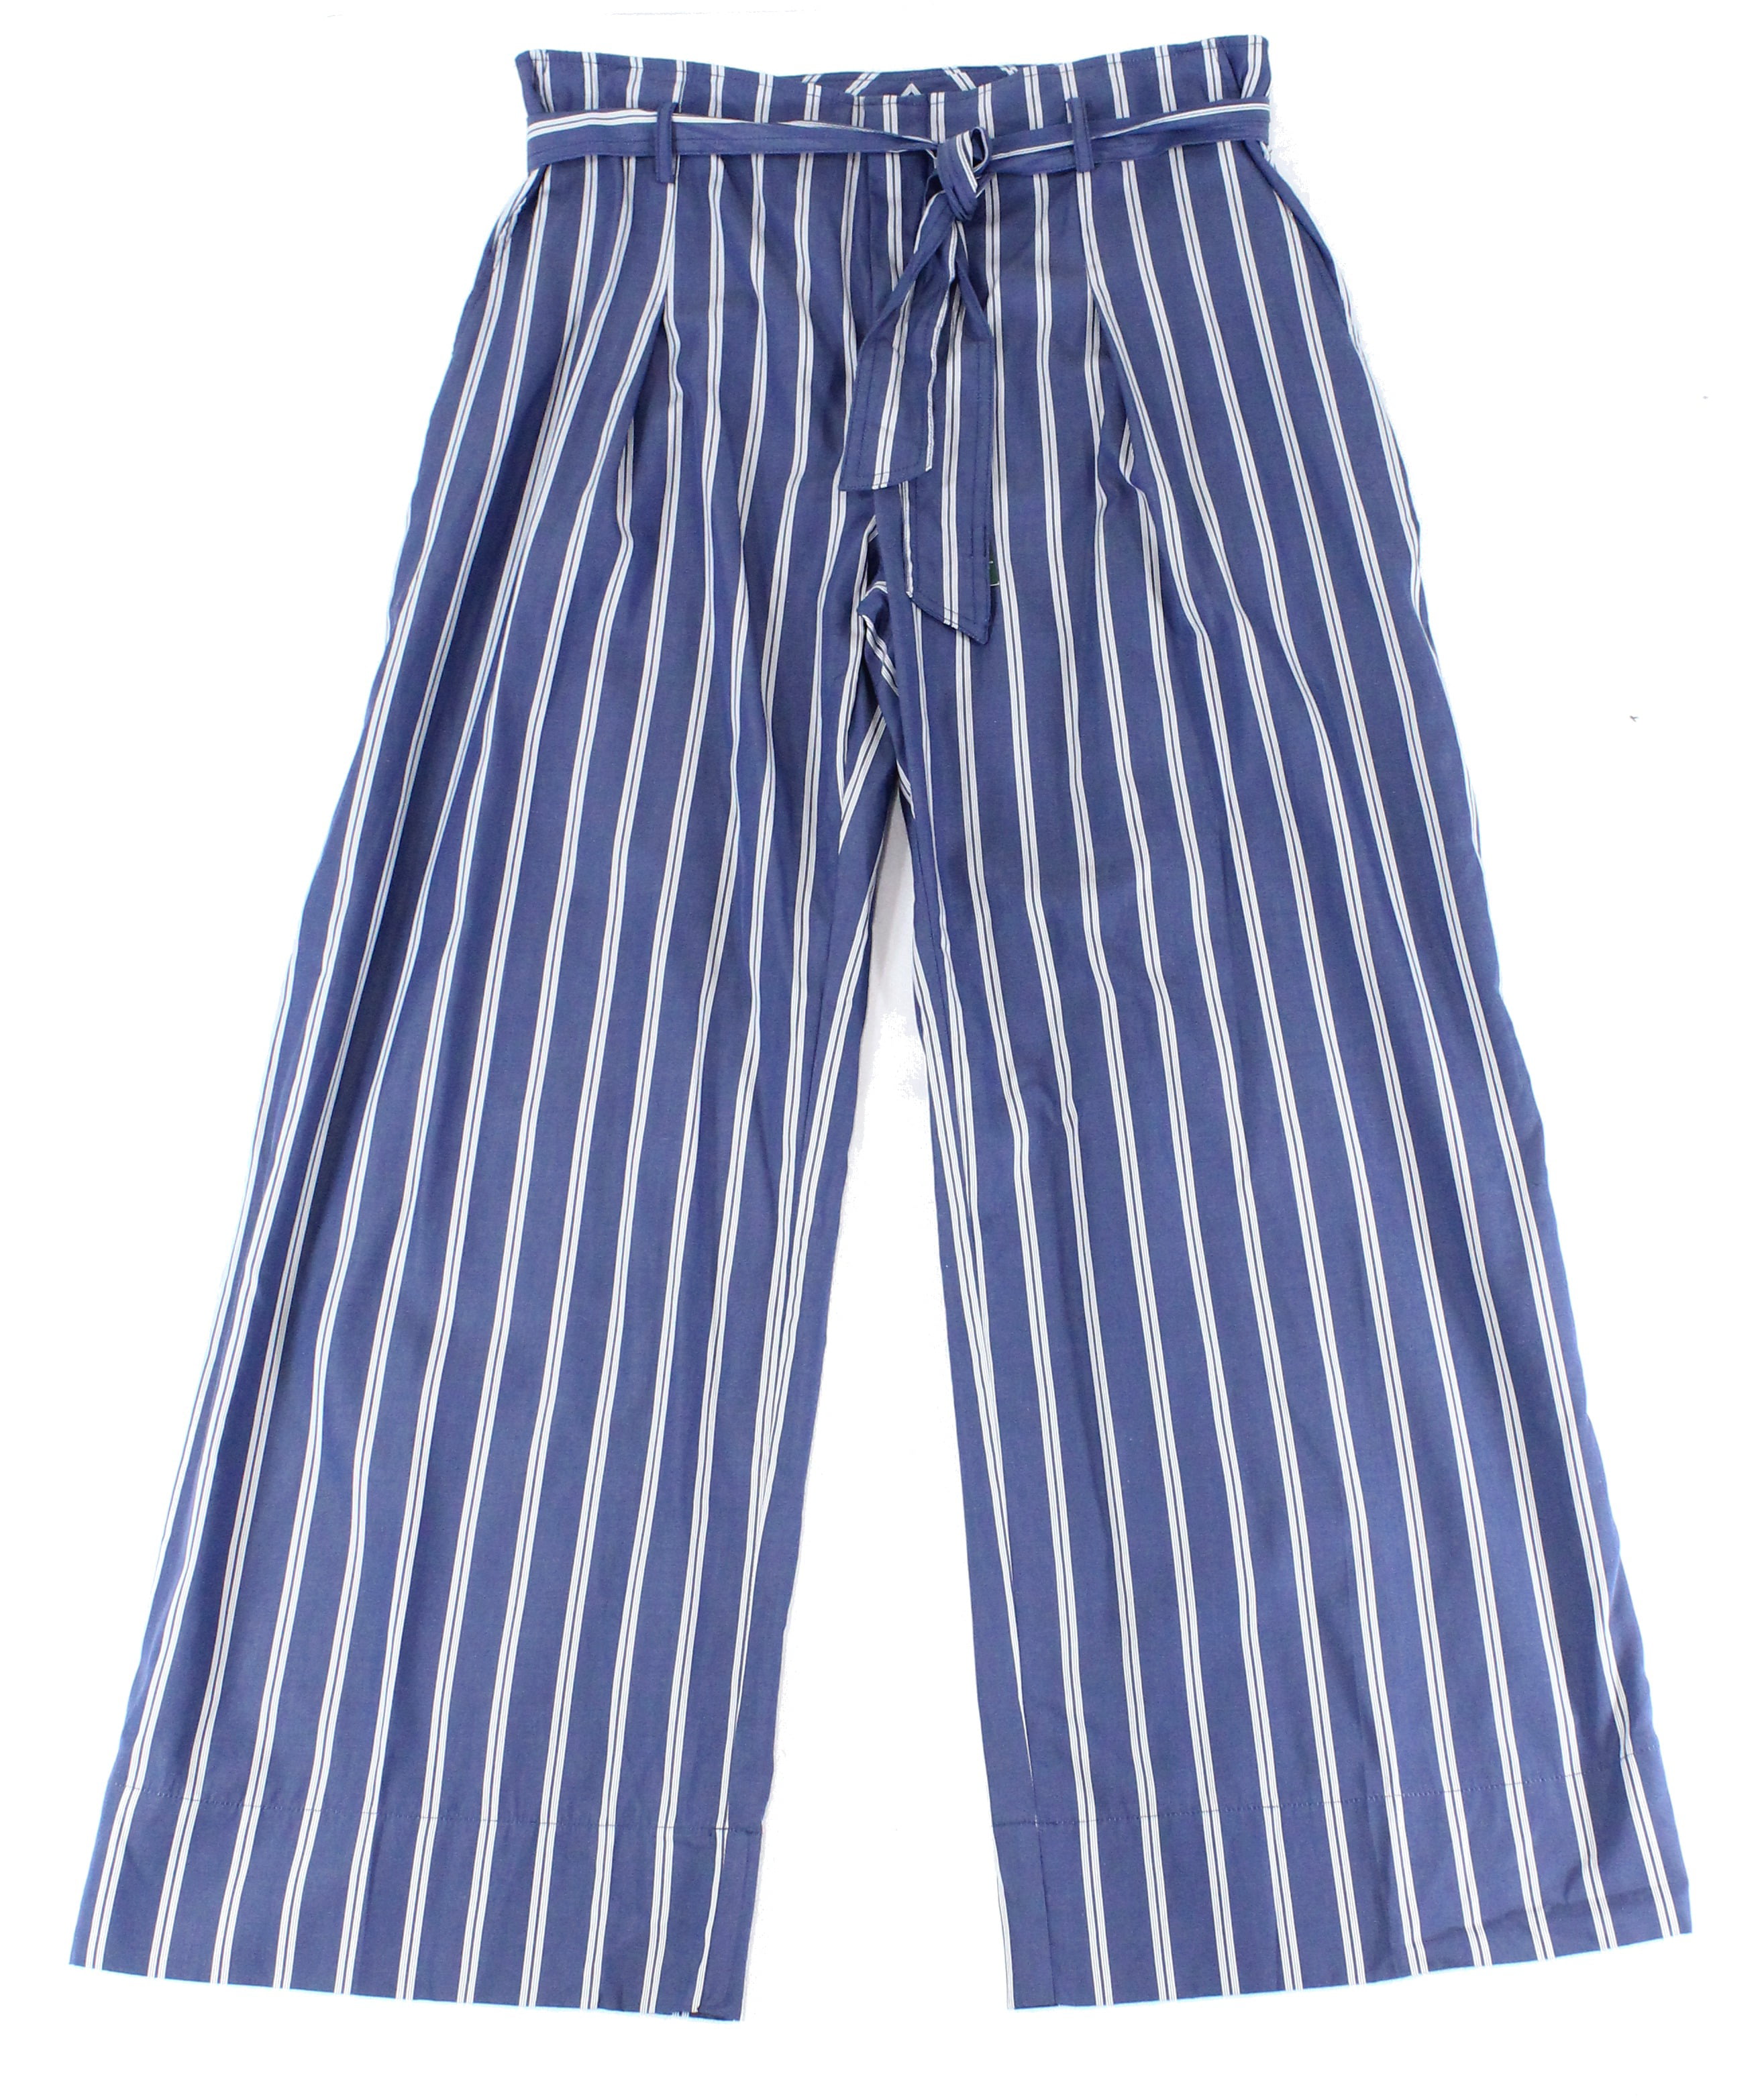 Ralph Lauren - Womens Pants Petite Striped 14P - Walmart.com - Walmart.com